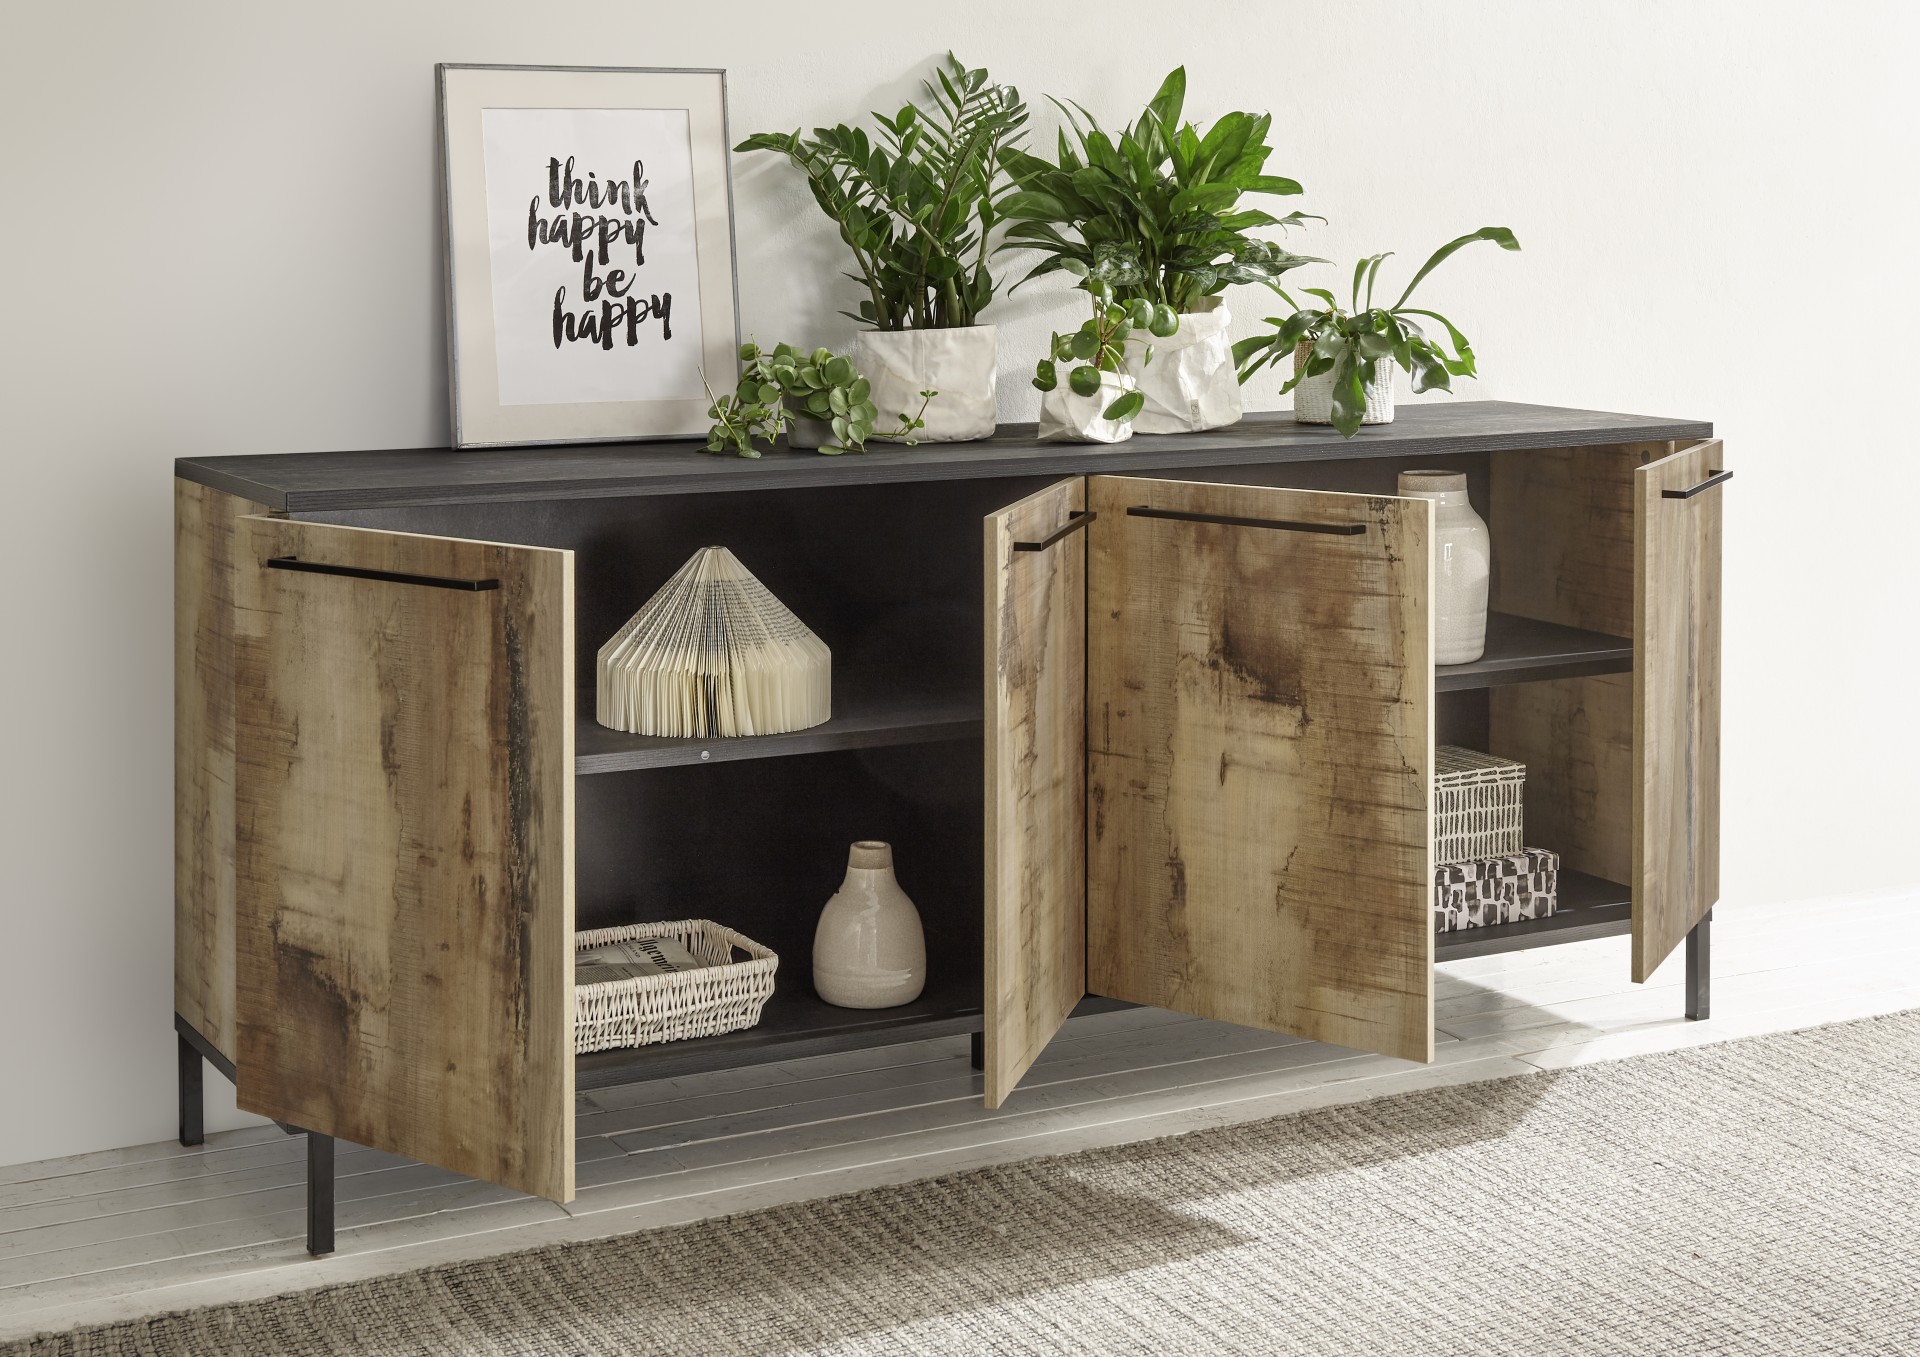 Pelmel JEP genie dressoir vintage look 207 cm - Hoogglans meubelen / mango houten meubelen |  Aktie Wonen.nl